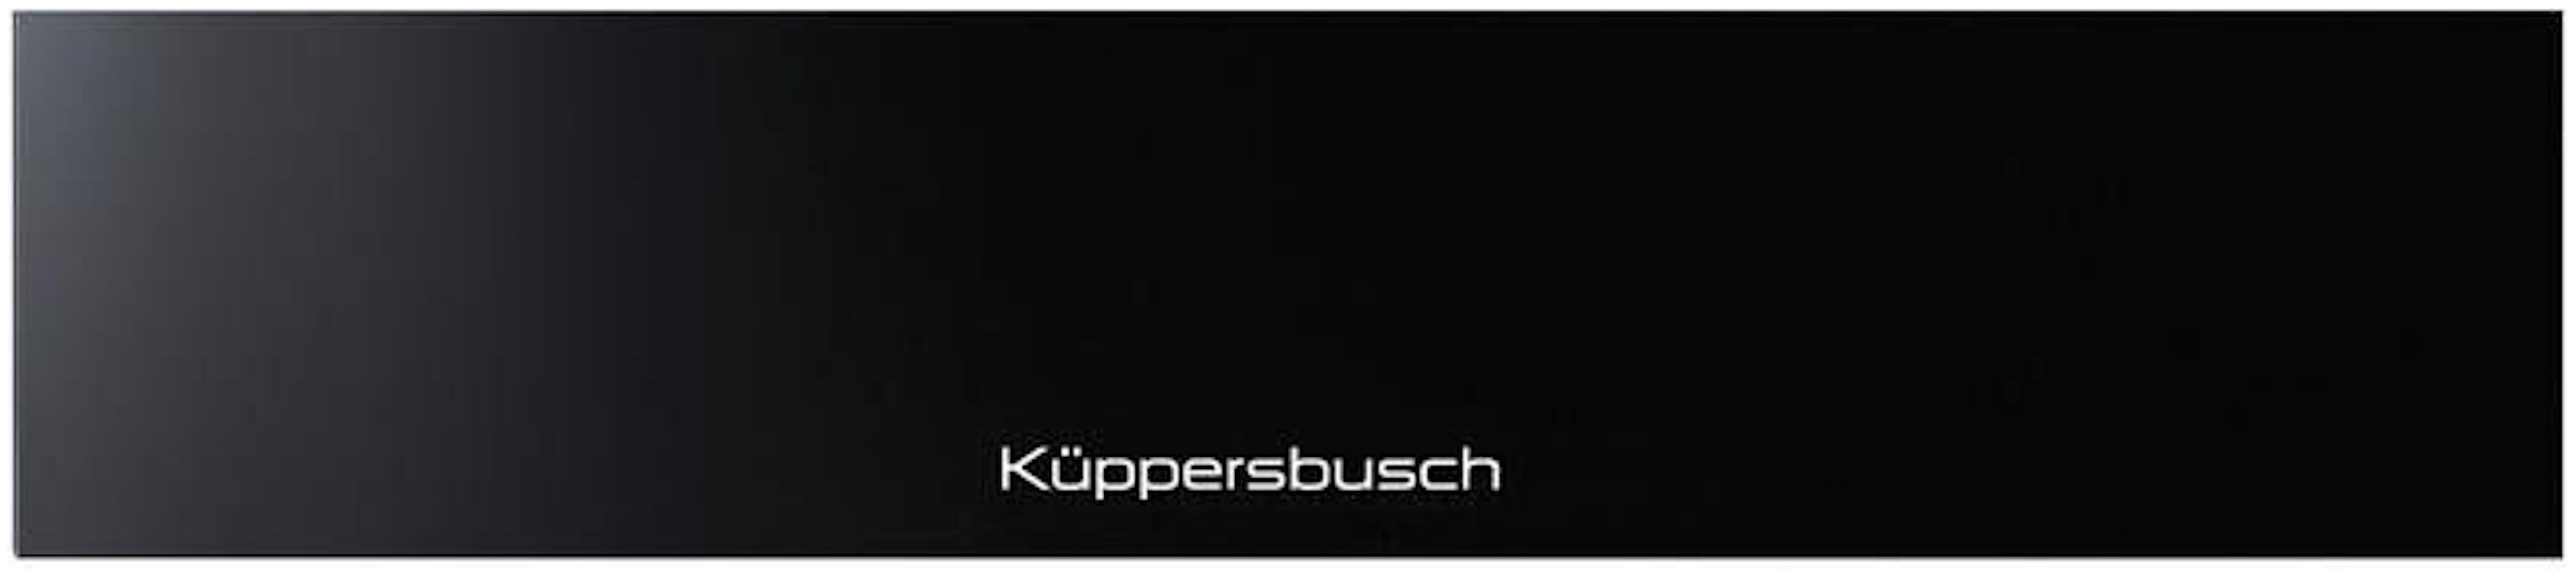 Kuppersbusch CSV6800.0